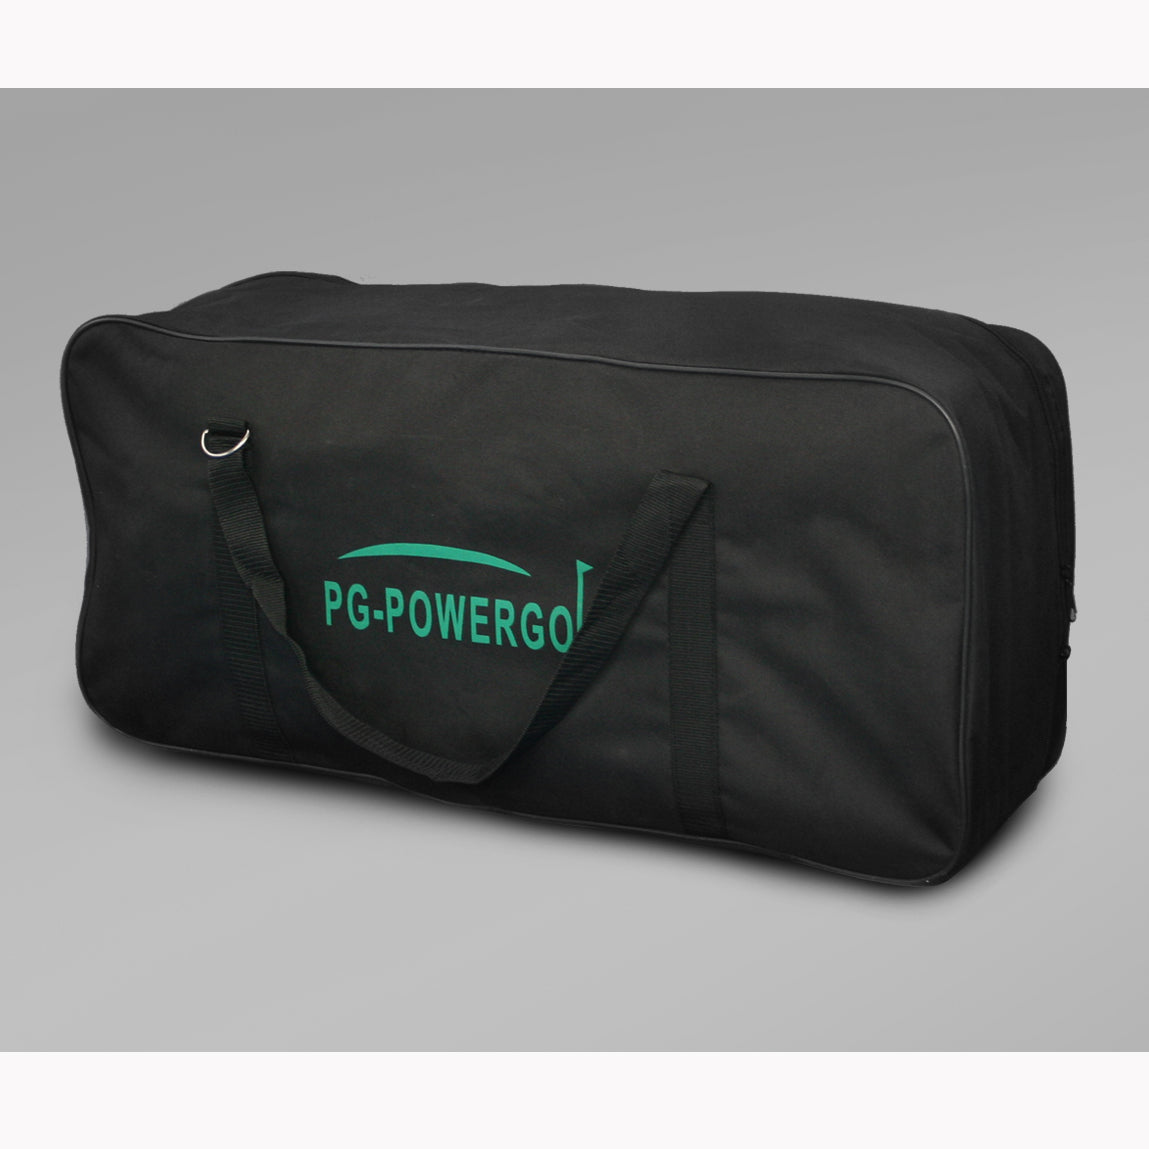 PG Powergolf carry case